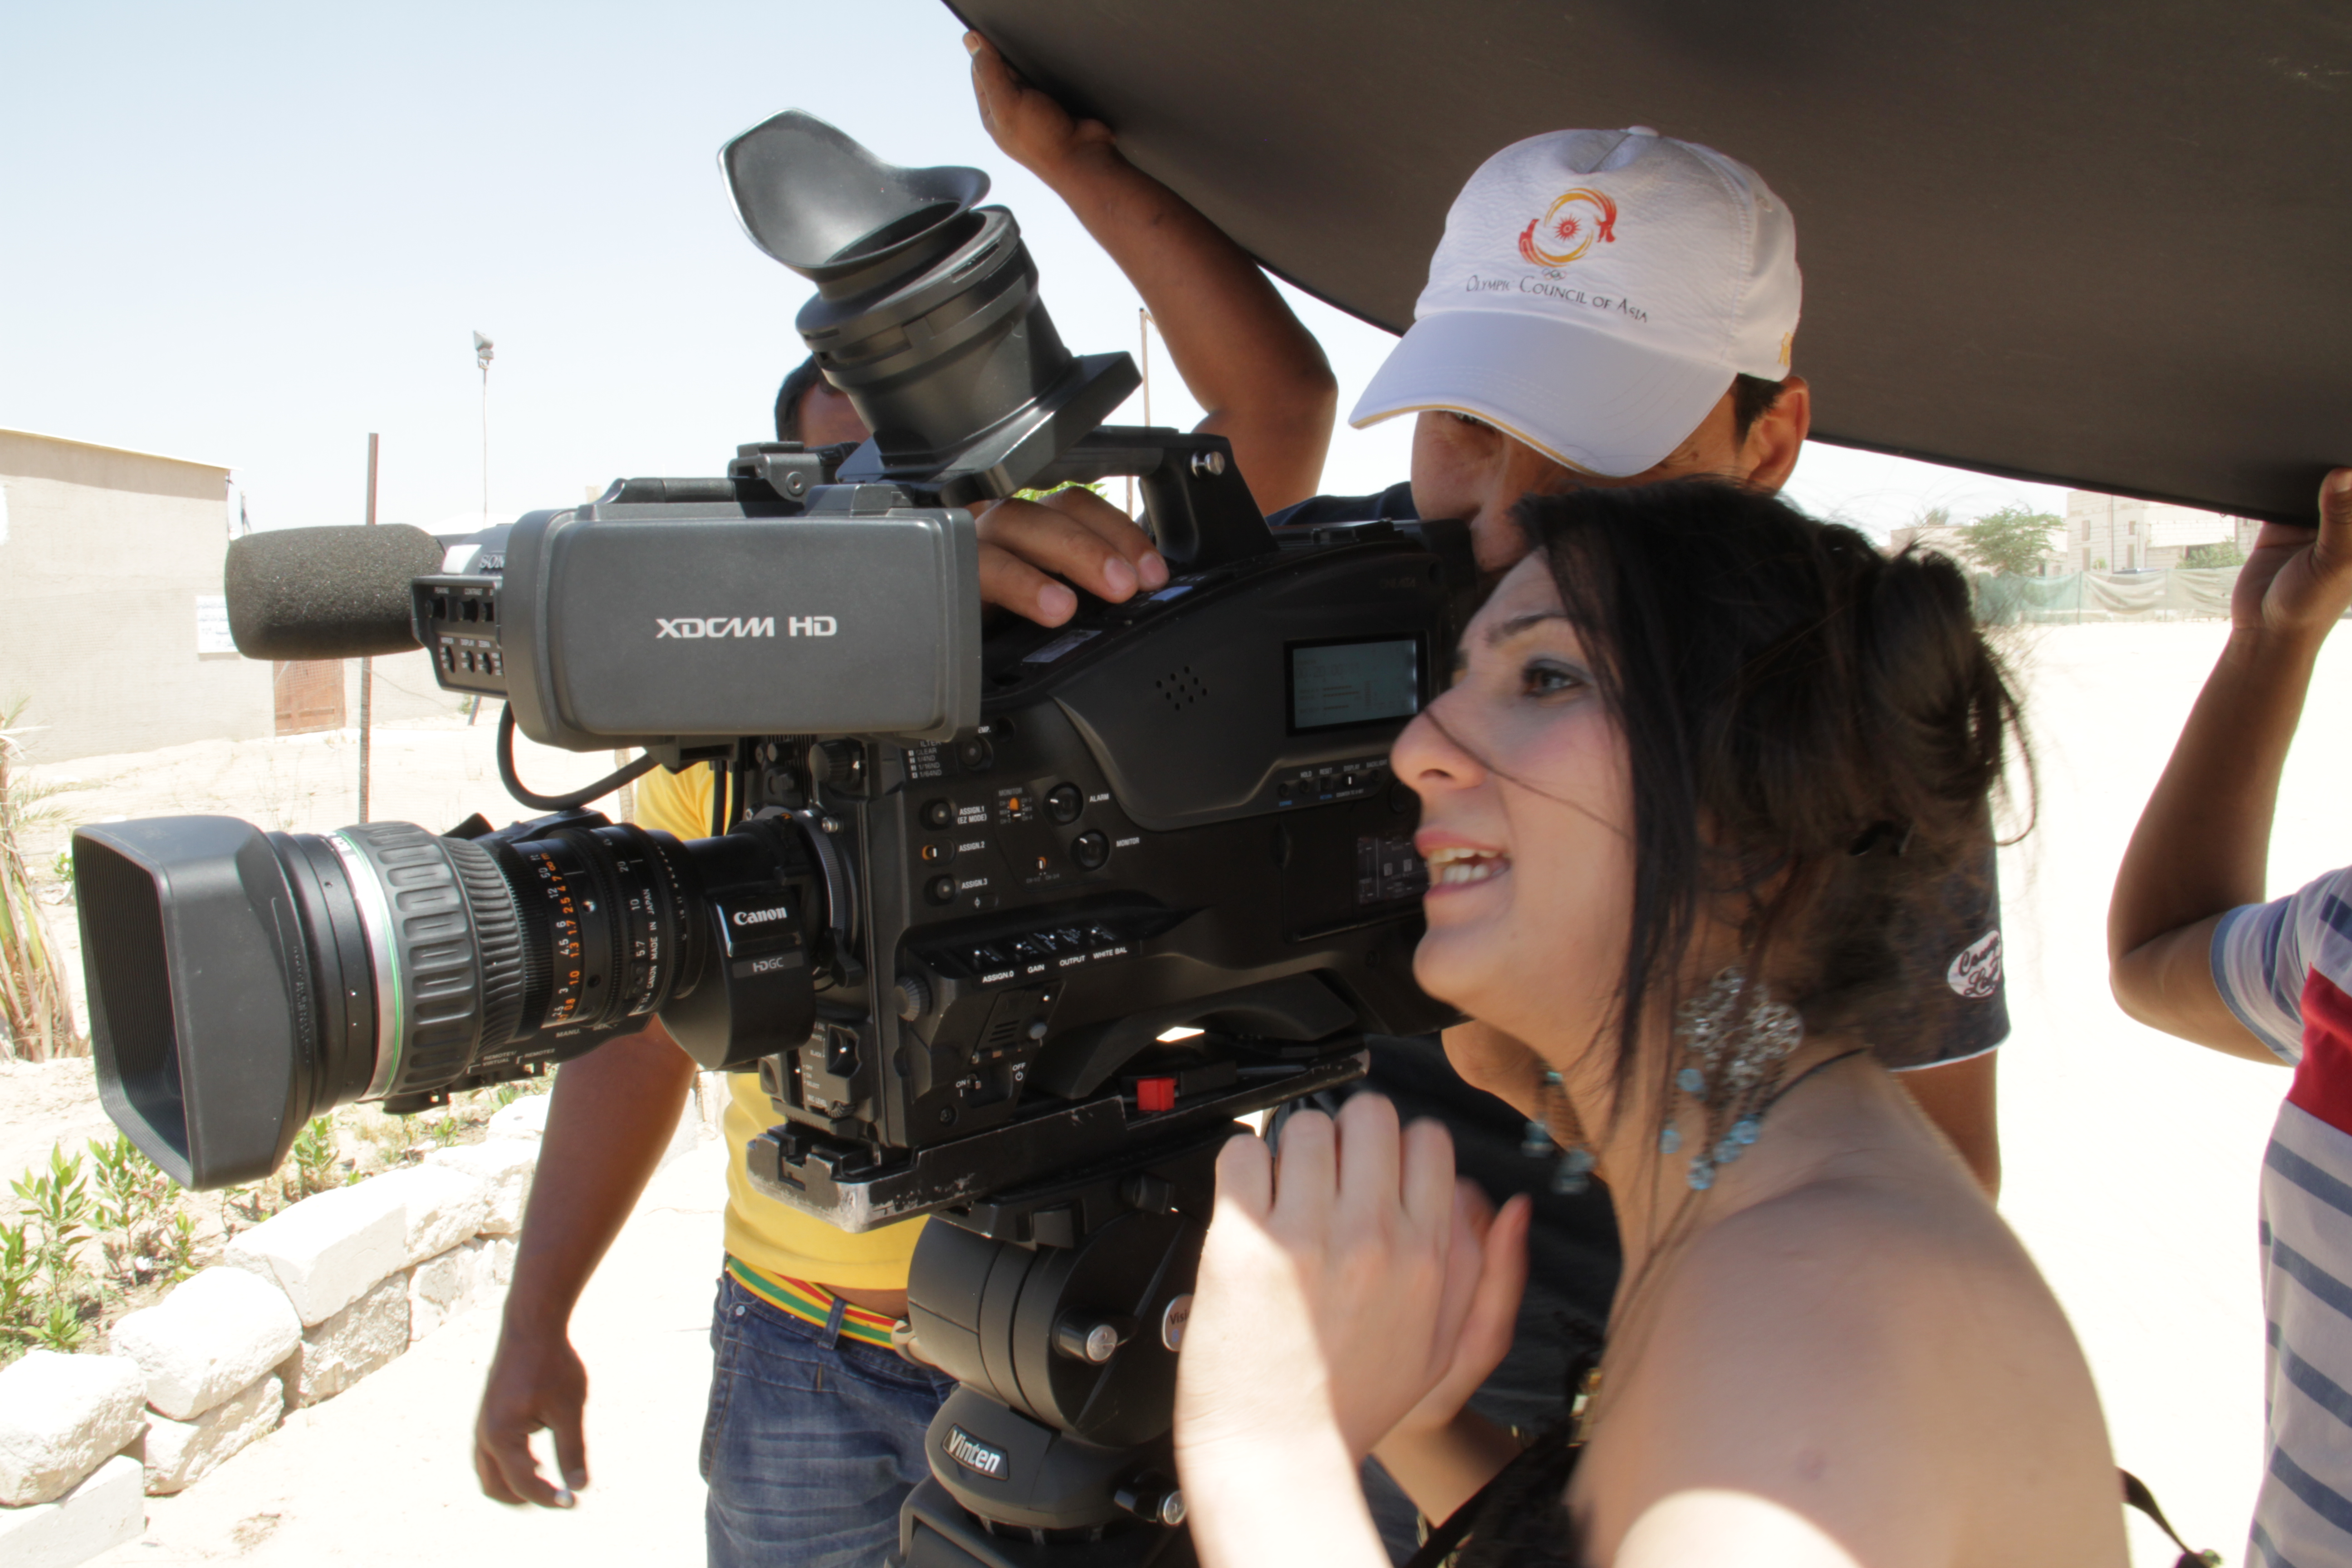 filmmaker, Director of her music video. 2013